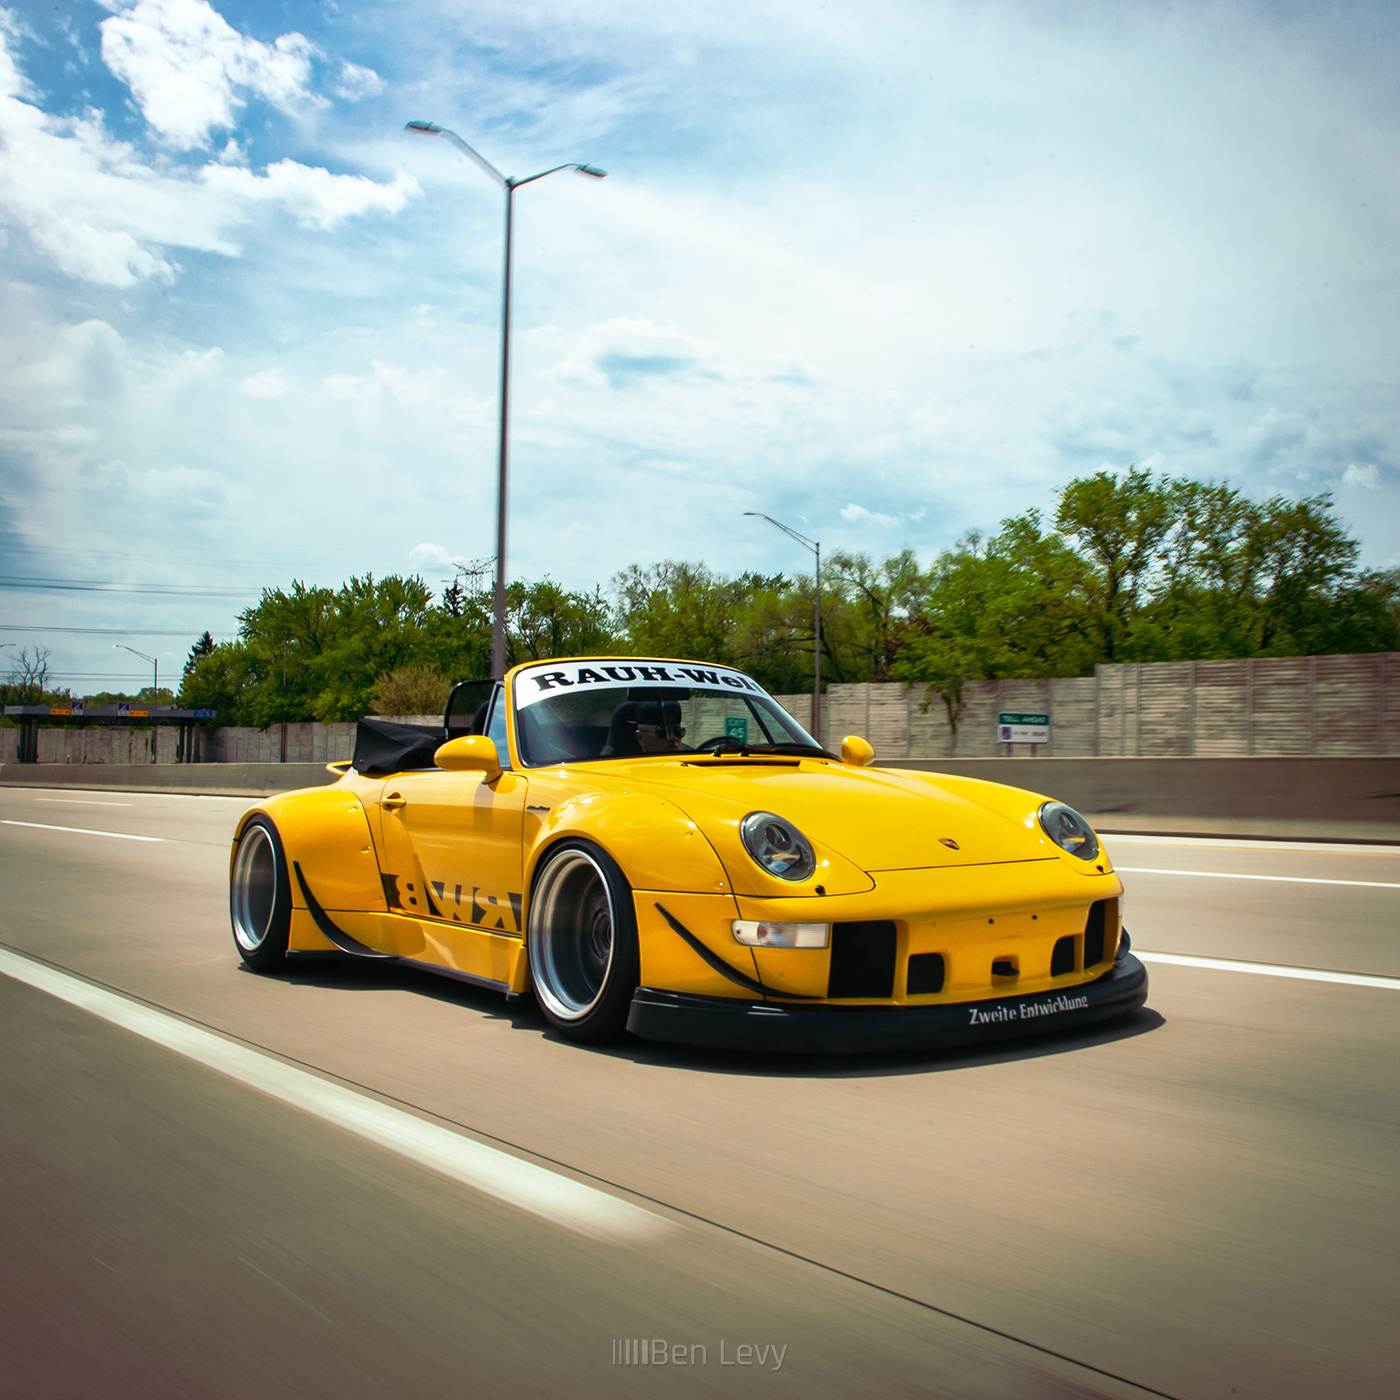 Roller of Yellow RWB Porsche 911 near Chicago